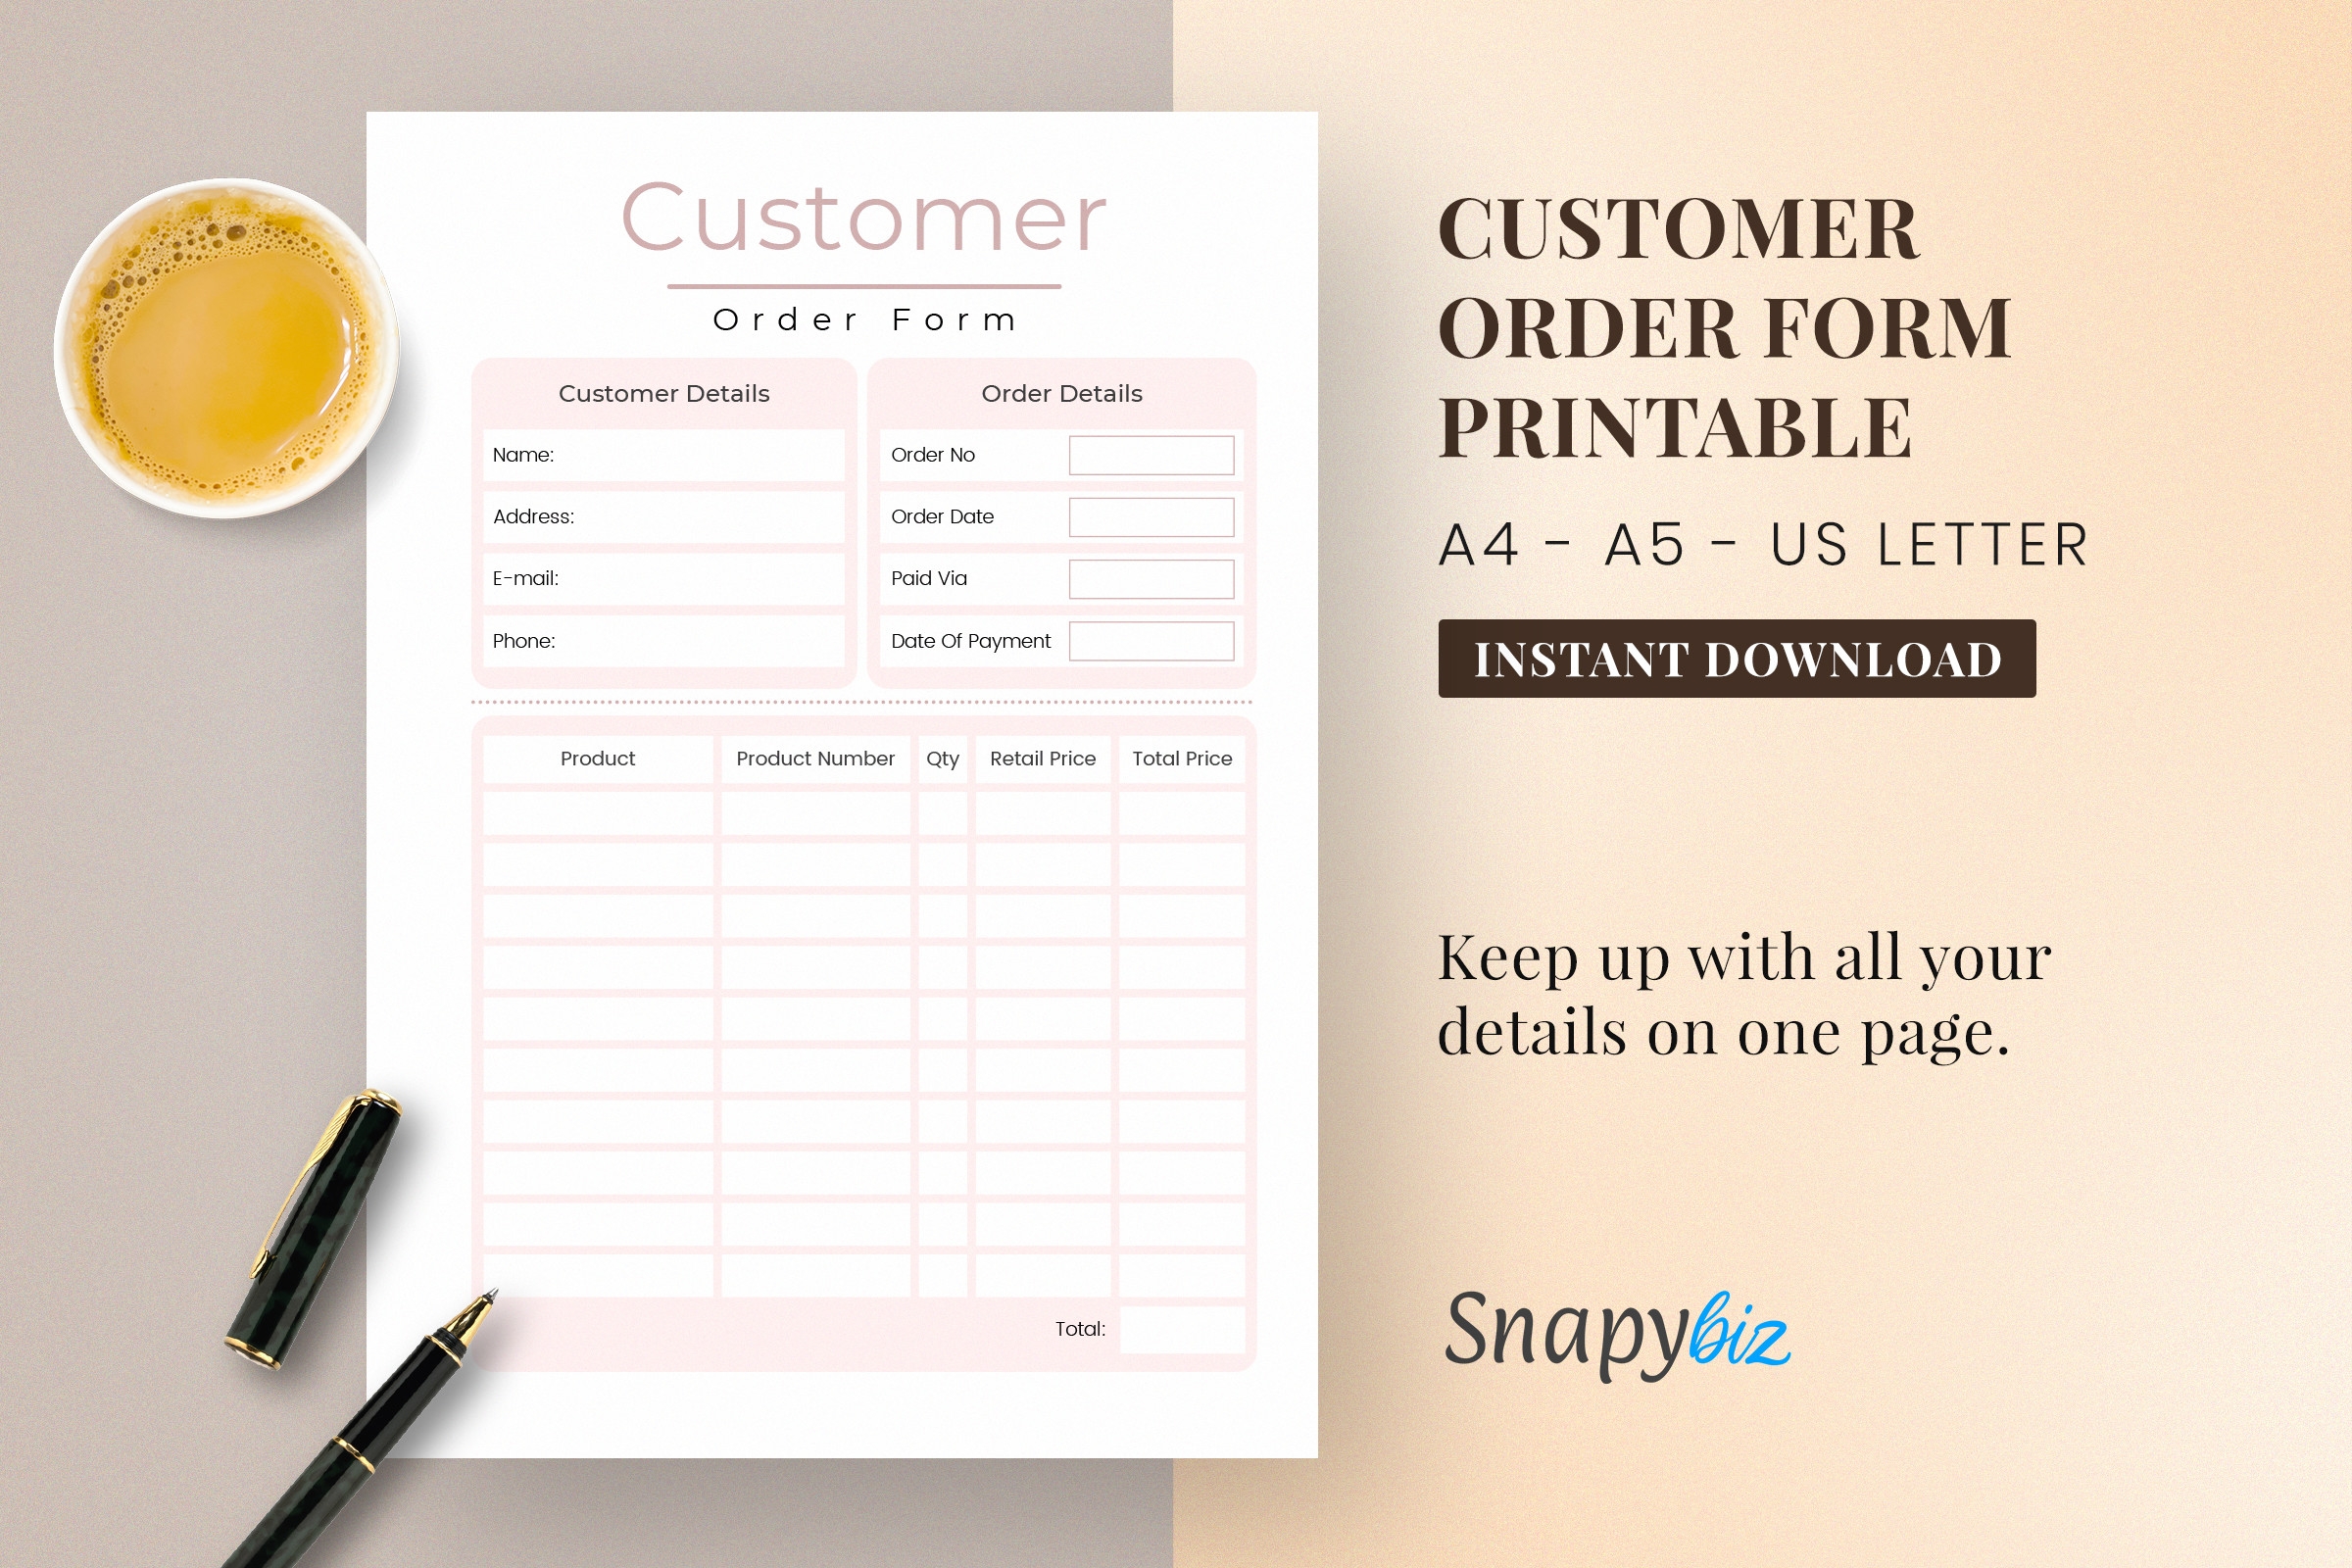 Customer Order Form Printable A4 A5 Grafik Von SnapyBiz Creative Fabrica